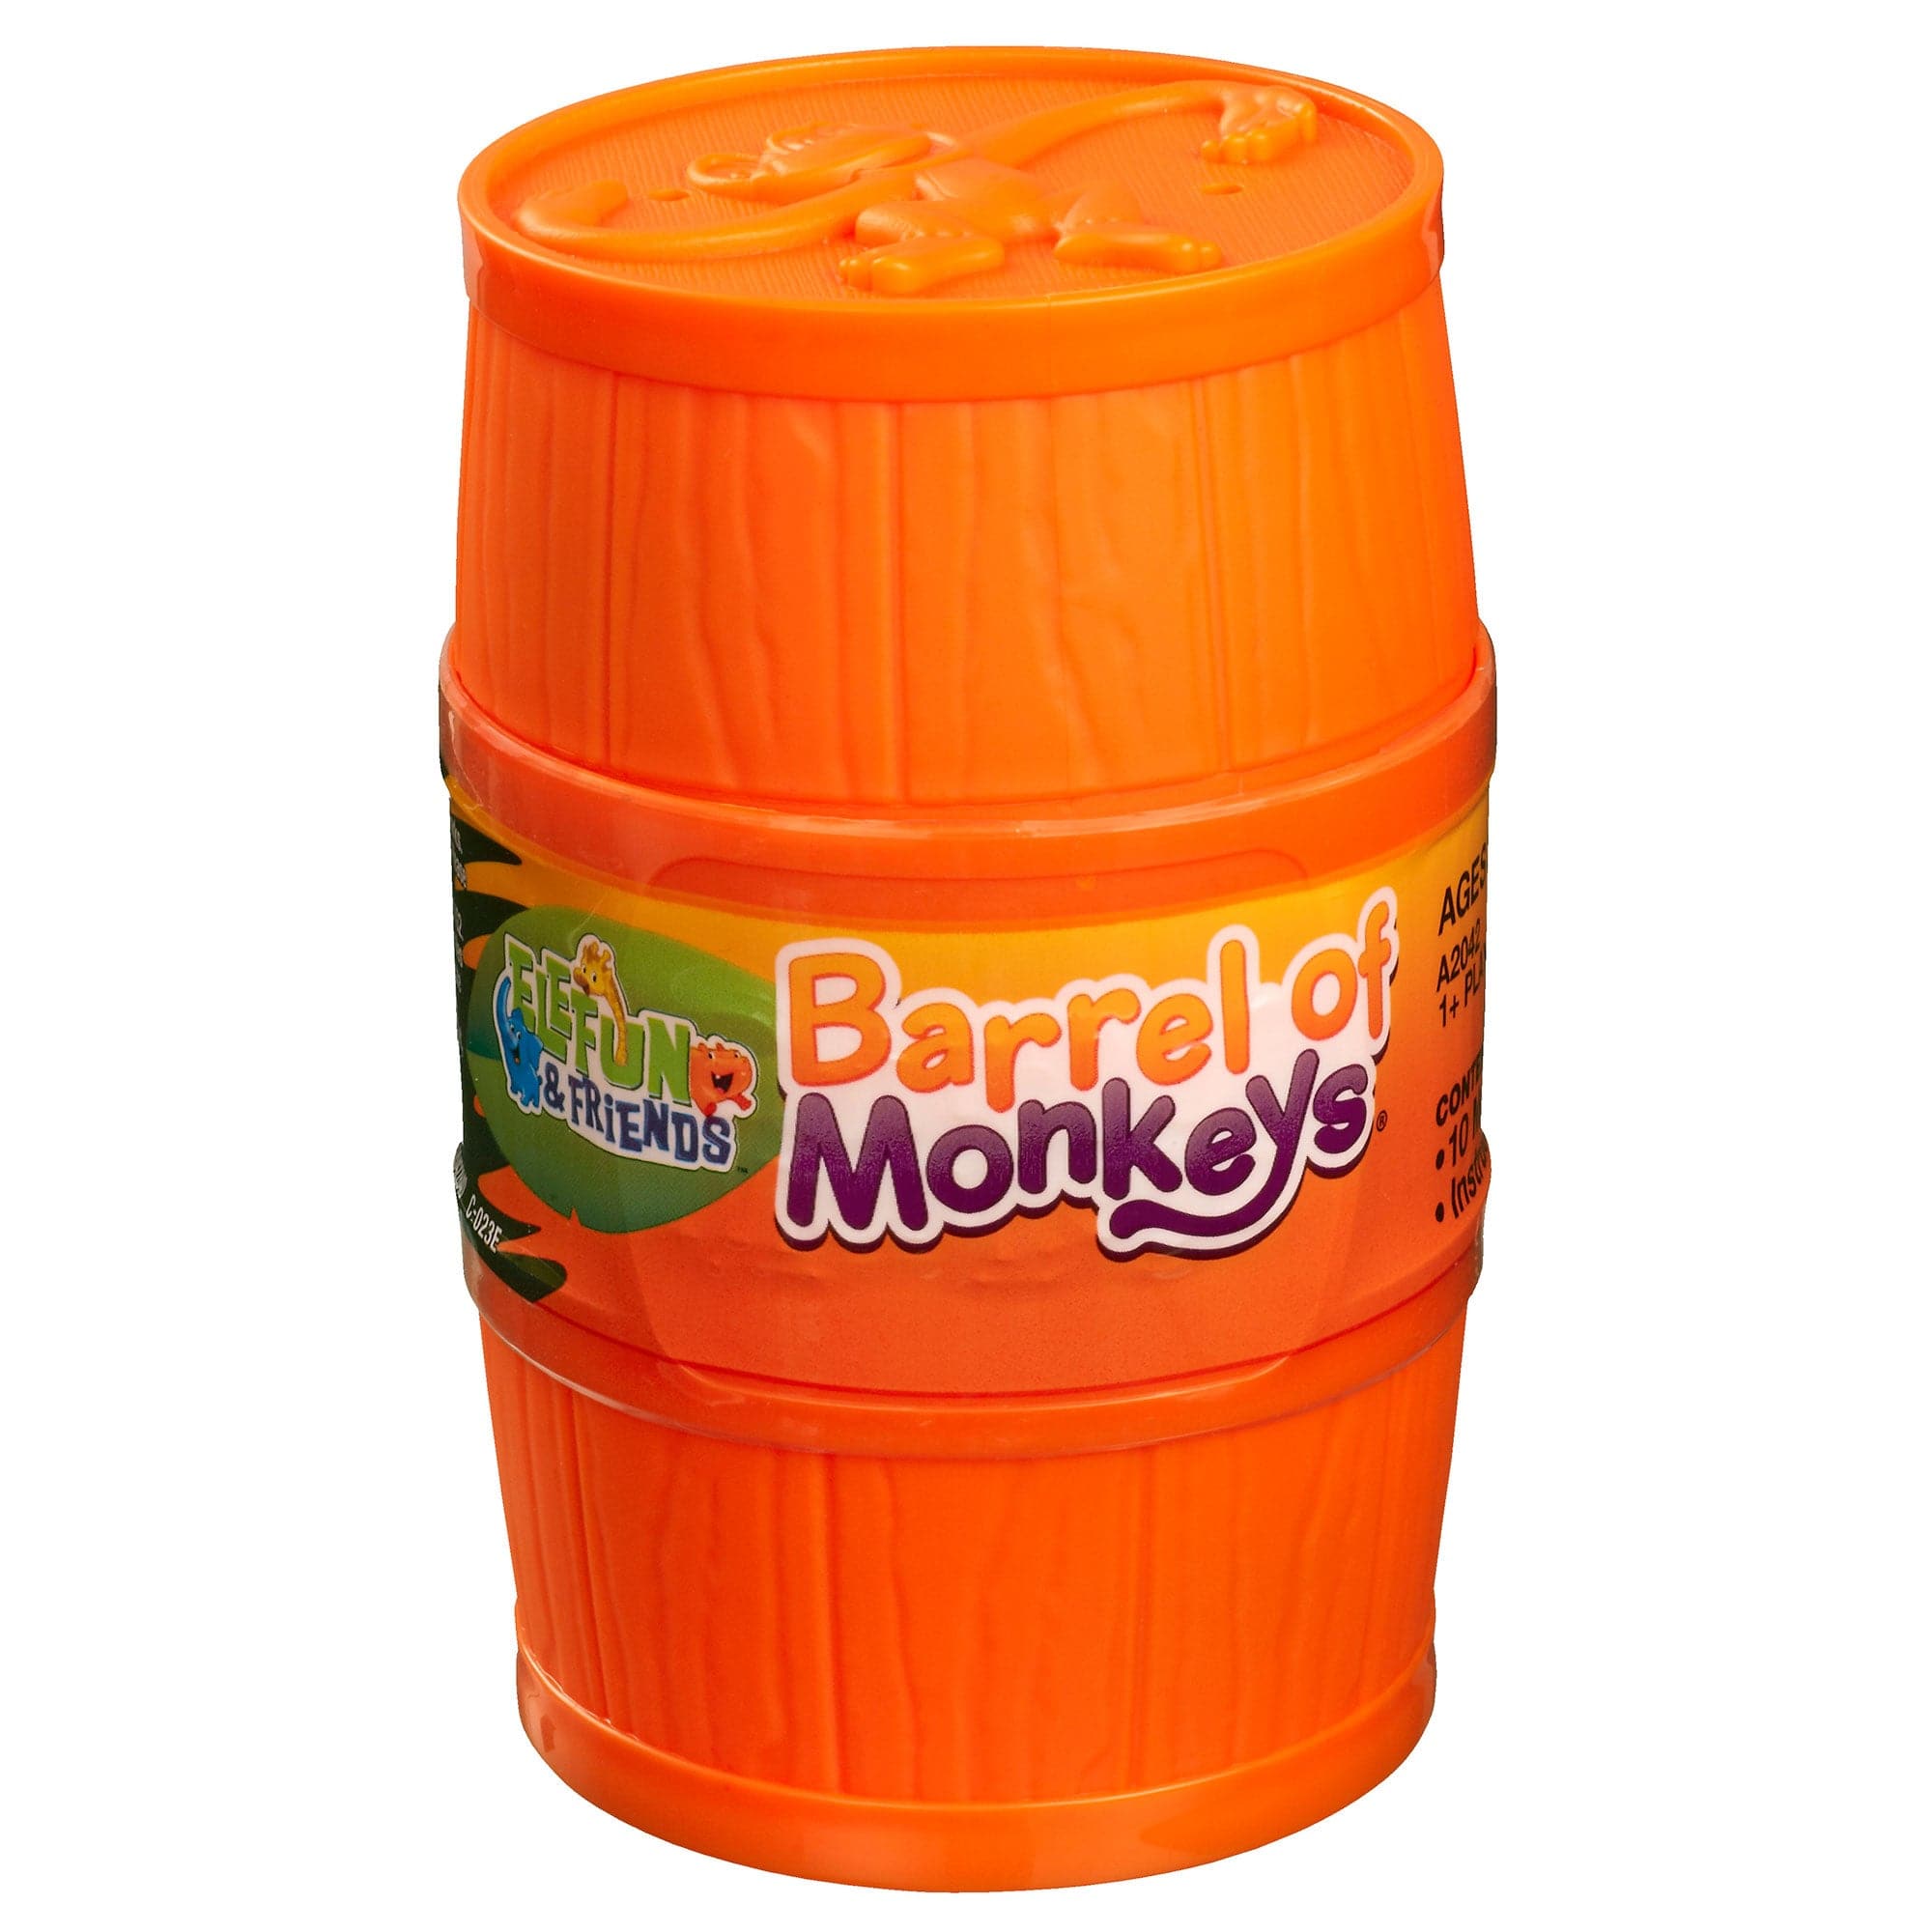 Hasbro-Elefun & Friends - Barrel of Monkeys - Assorted Colors-A2042-Legacy Toys